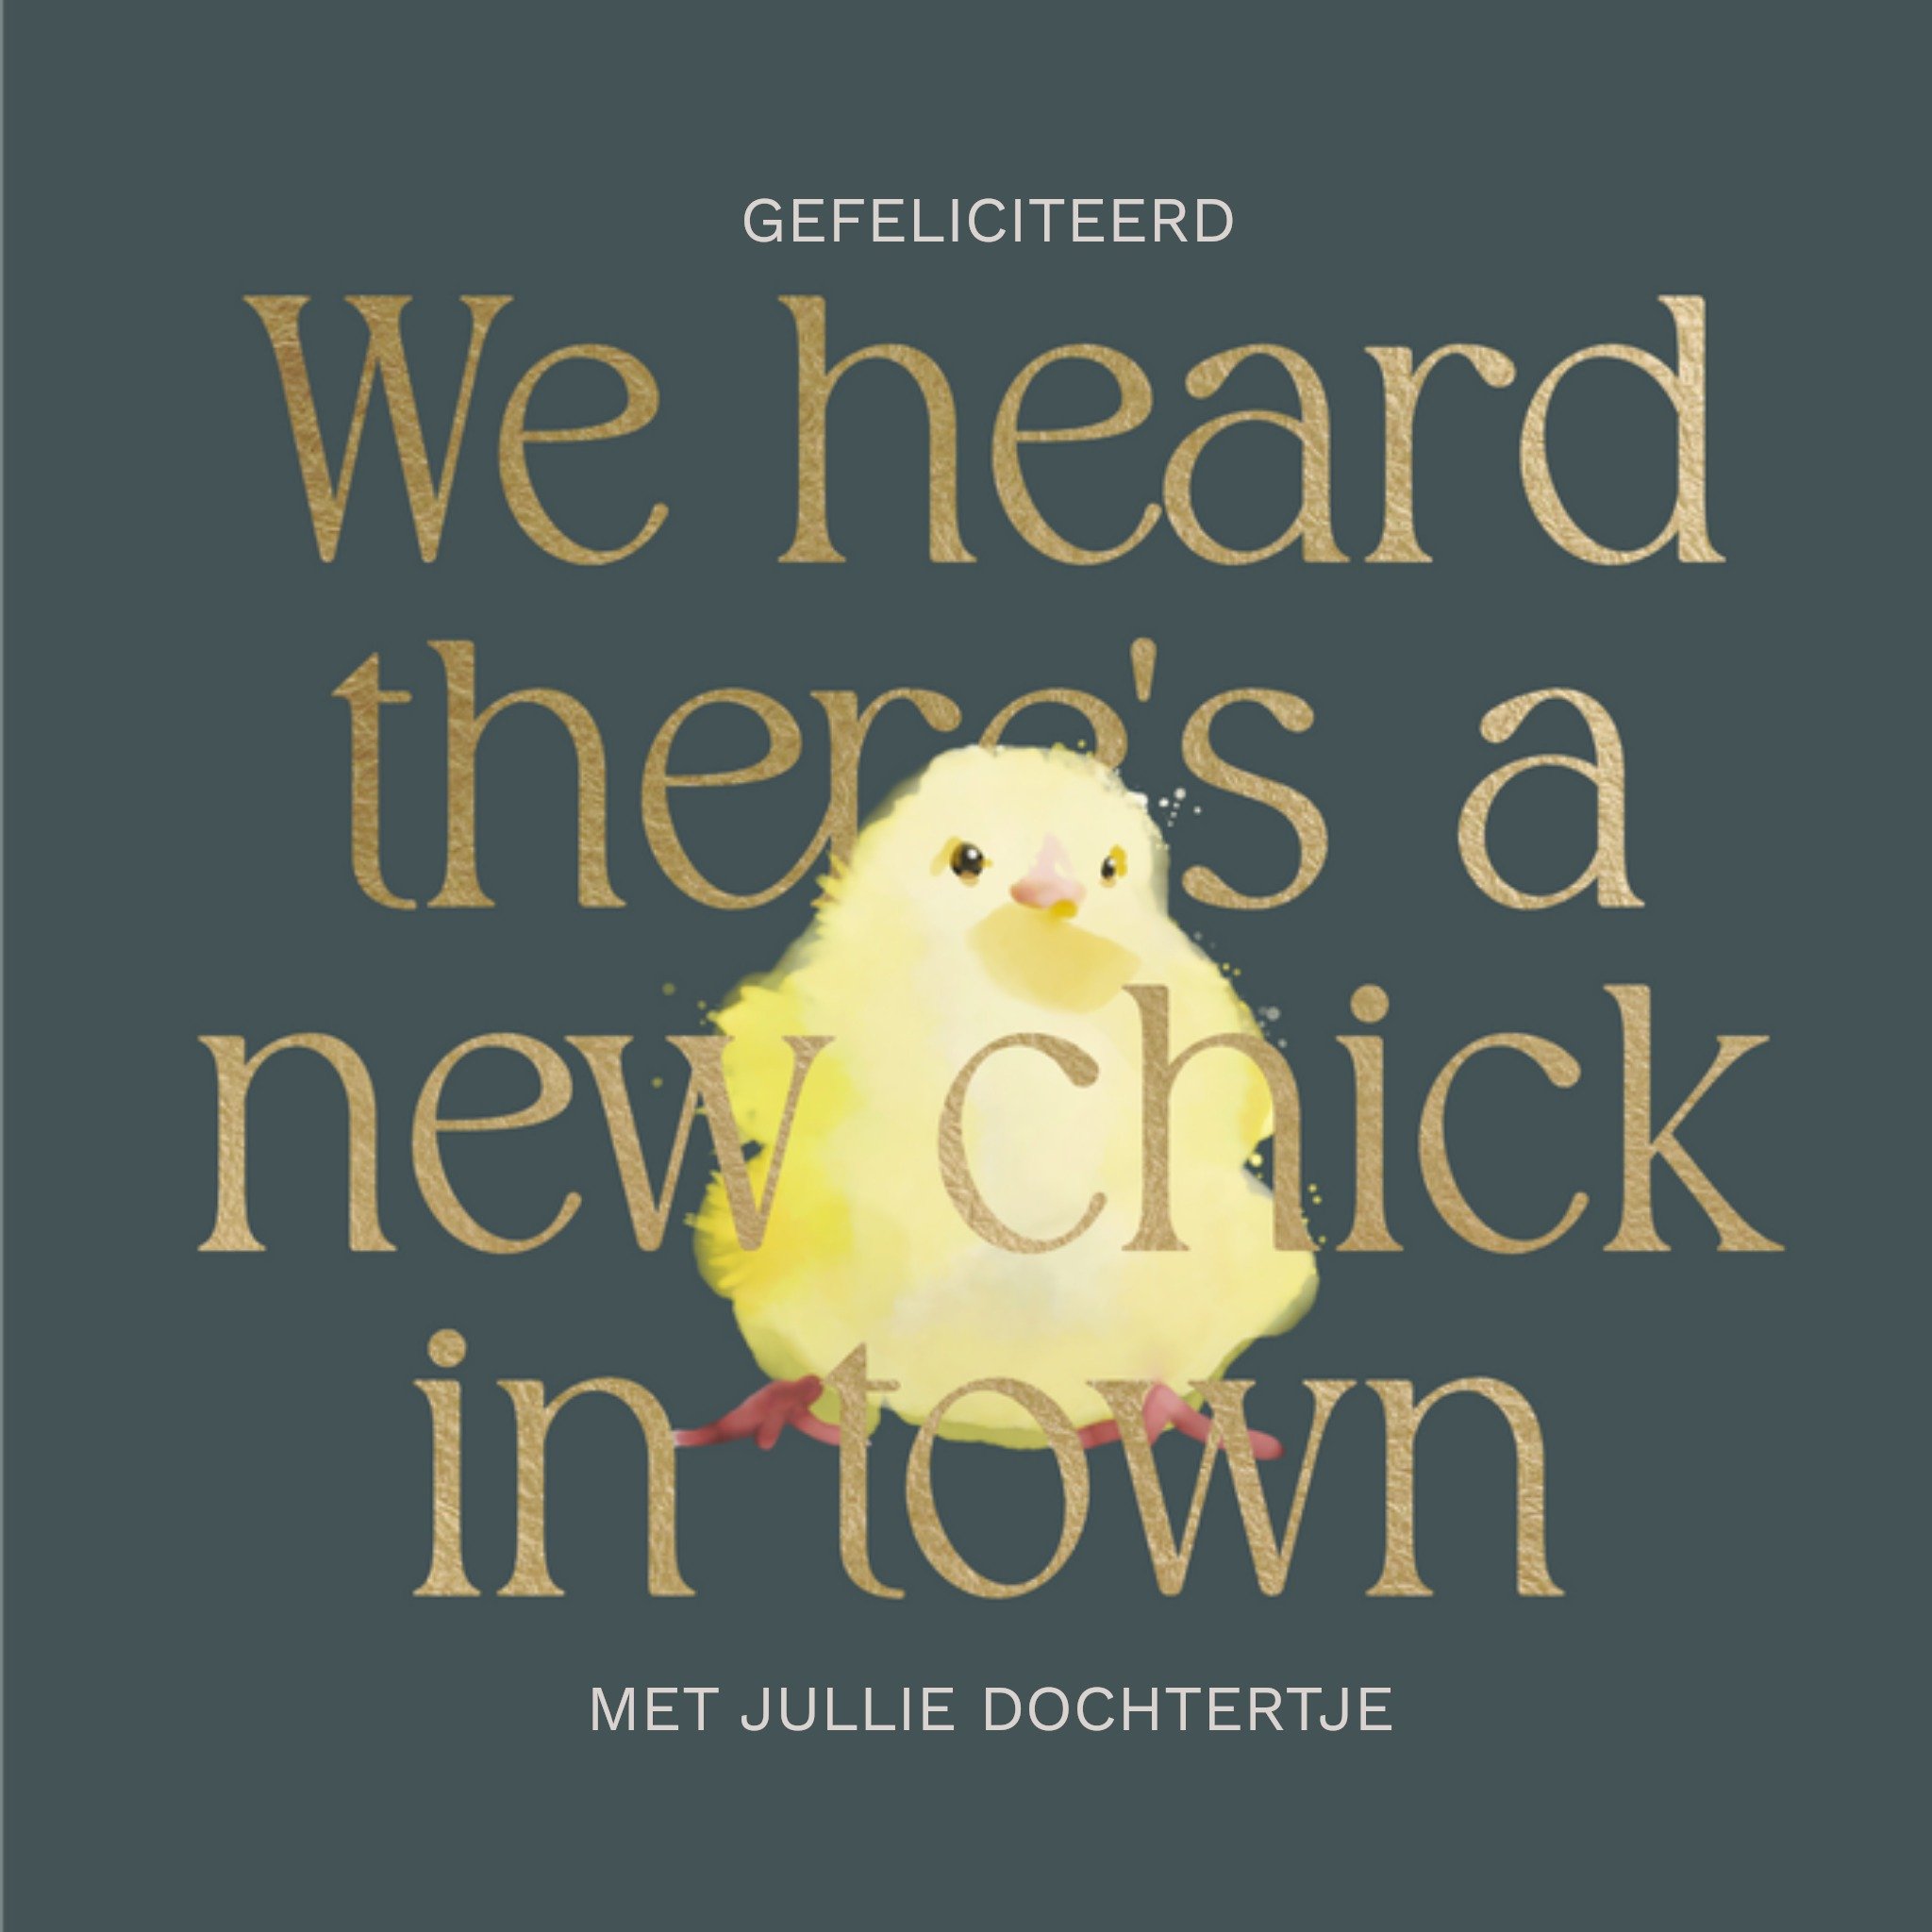 Geboortekaart - A new chick in town